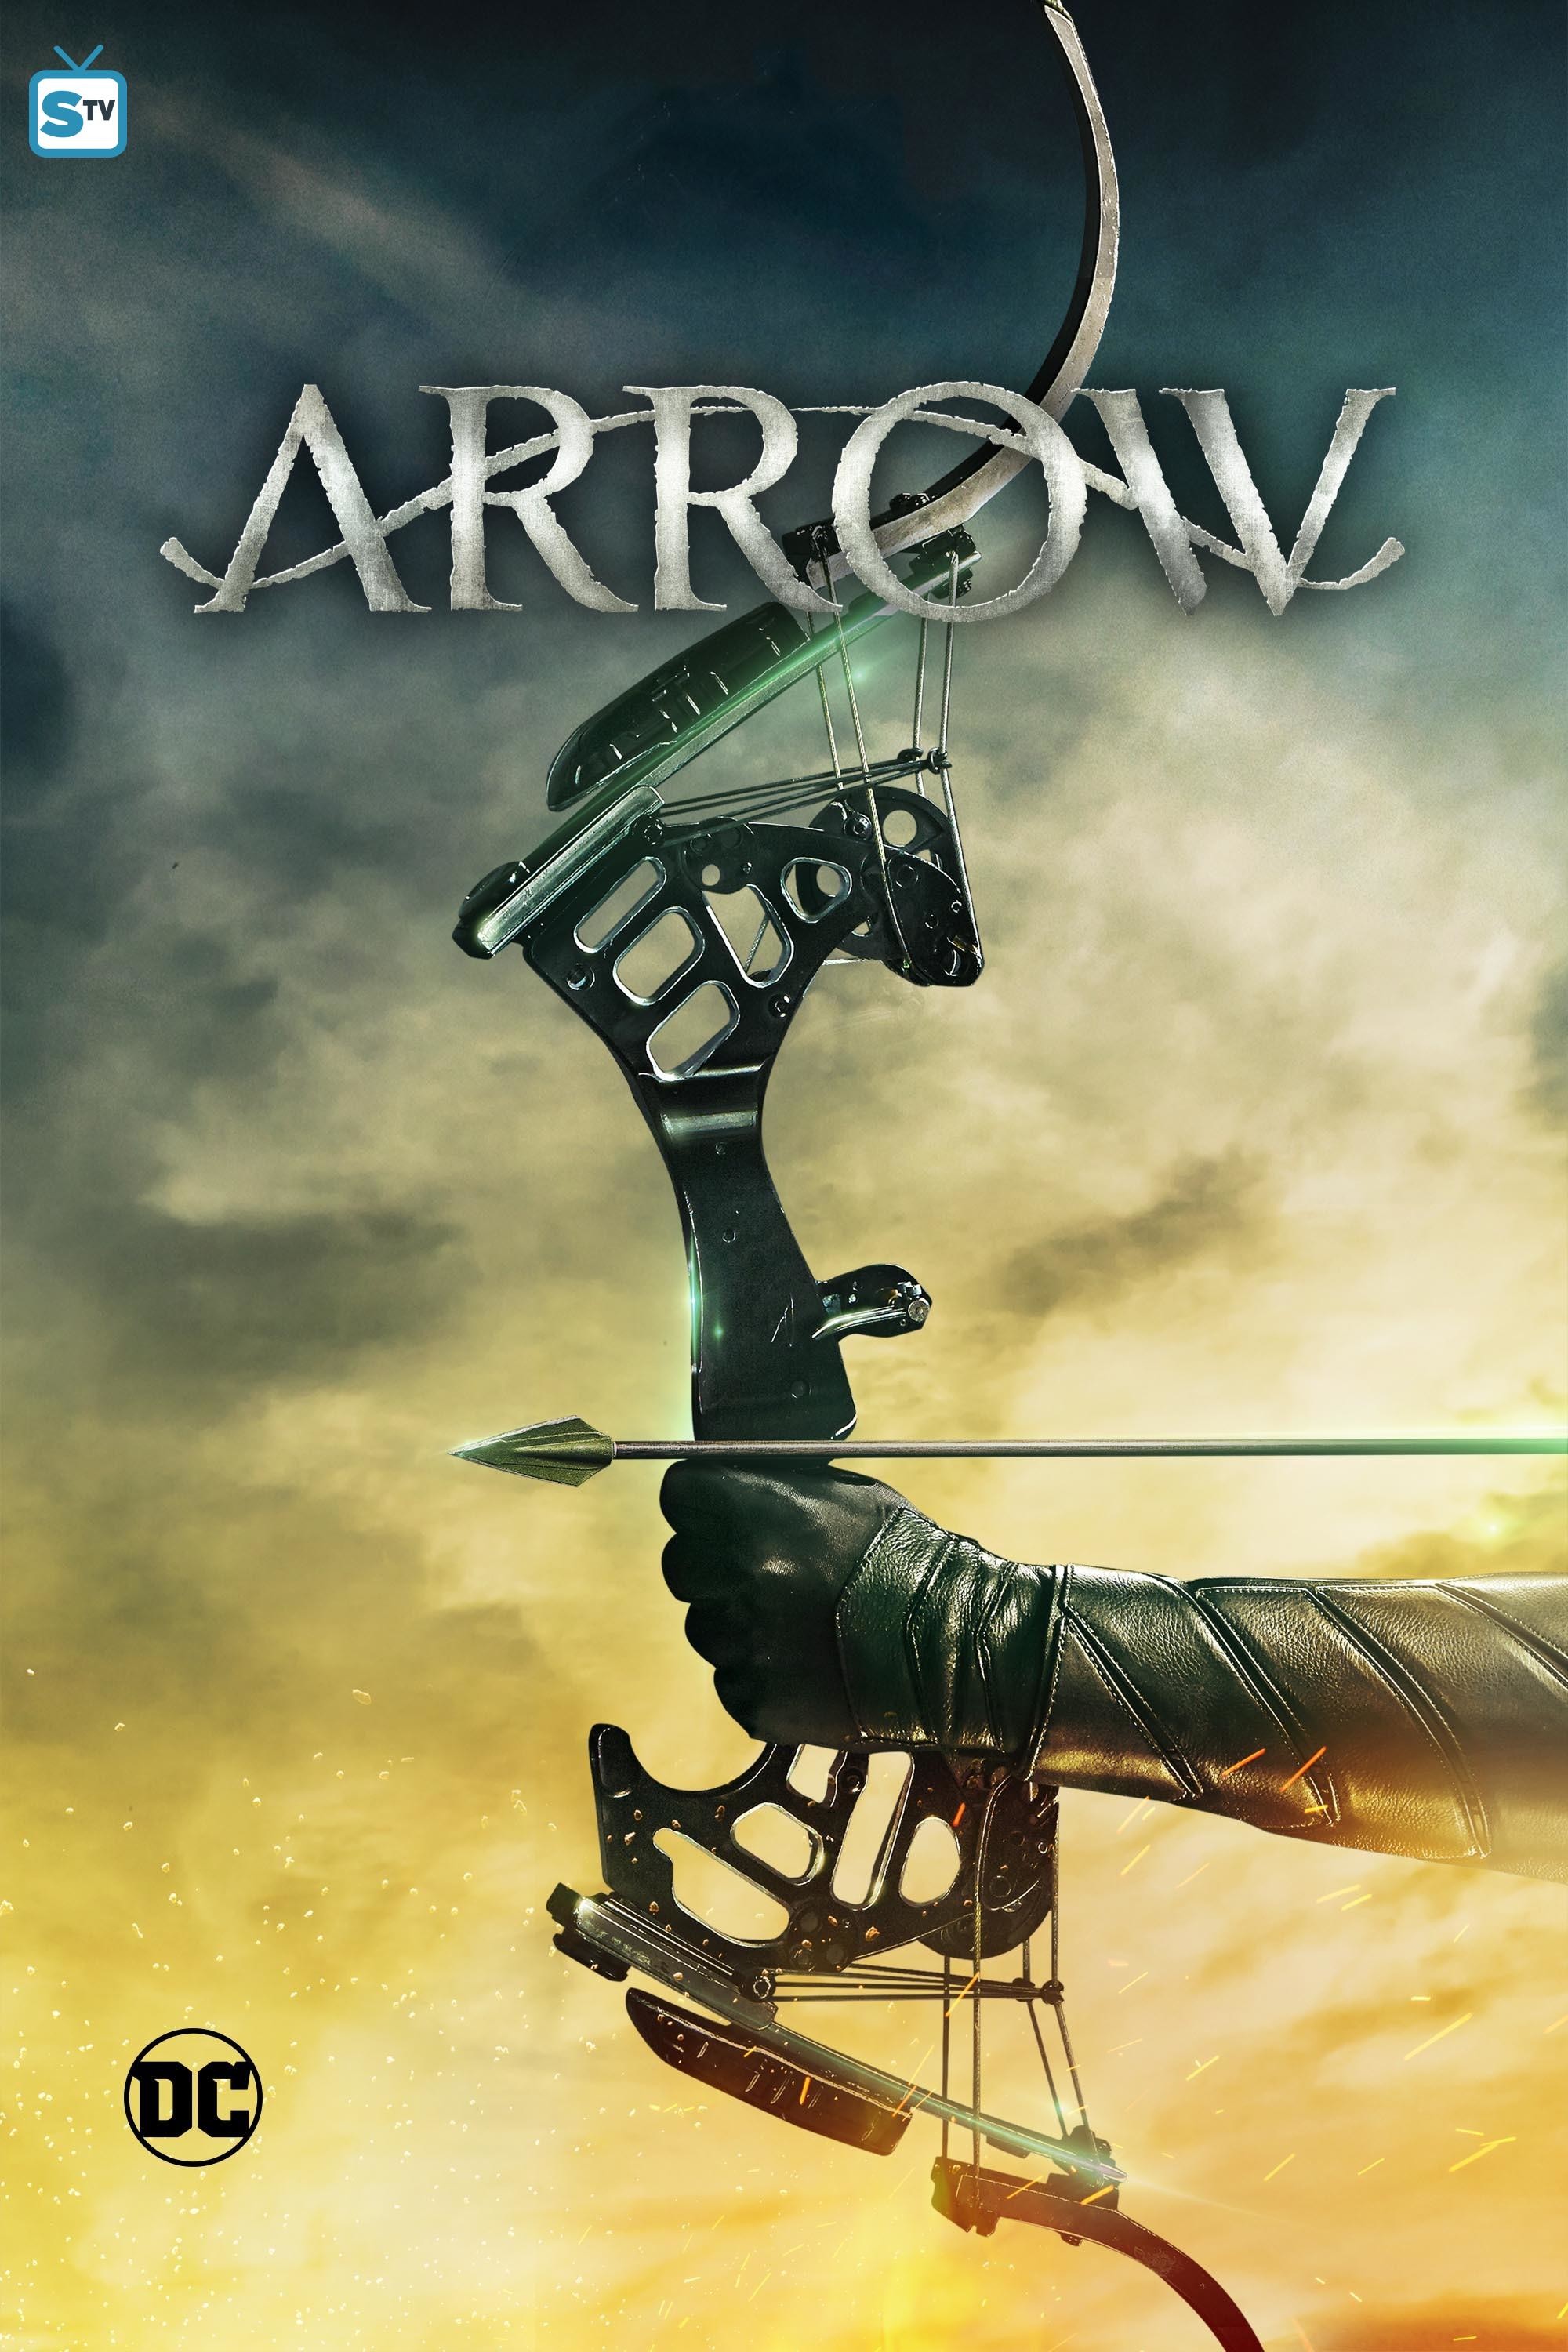 Arrow season 5 cellphone wallpaper #iphone #poster #cw